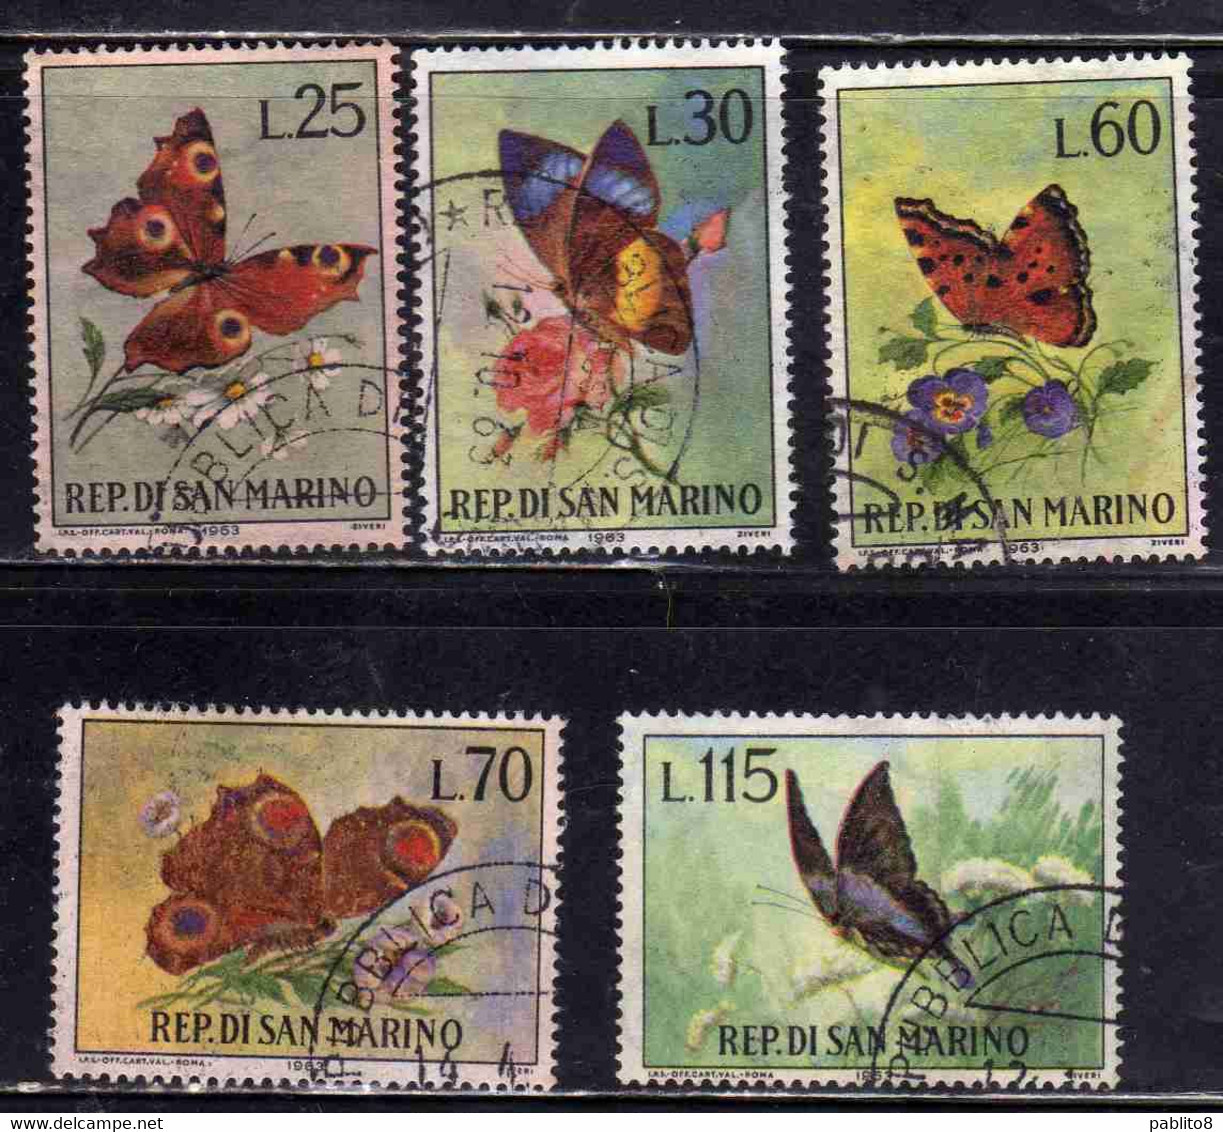 REPUBBLICA DI SAN MARINO 1963 FAUNA INSETTI INSECTS FARFALLE BUTTERFLIES SERIE COMPLETA COMPLETE SET USATA USED OBLITERE - Used Stamps